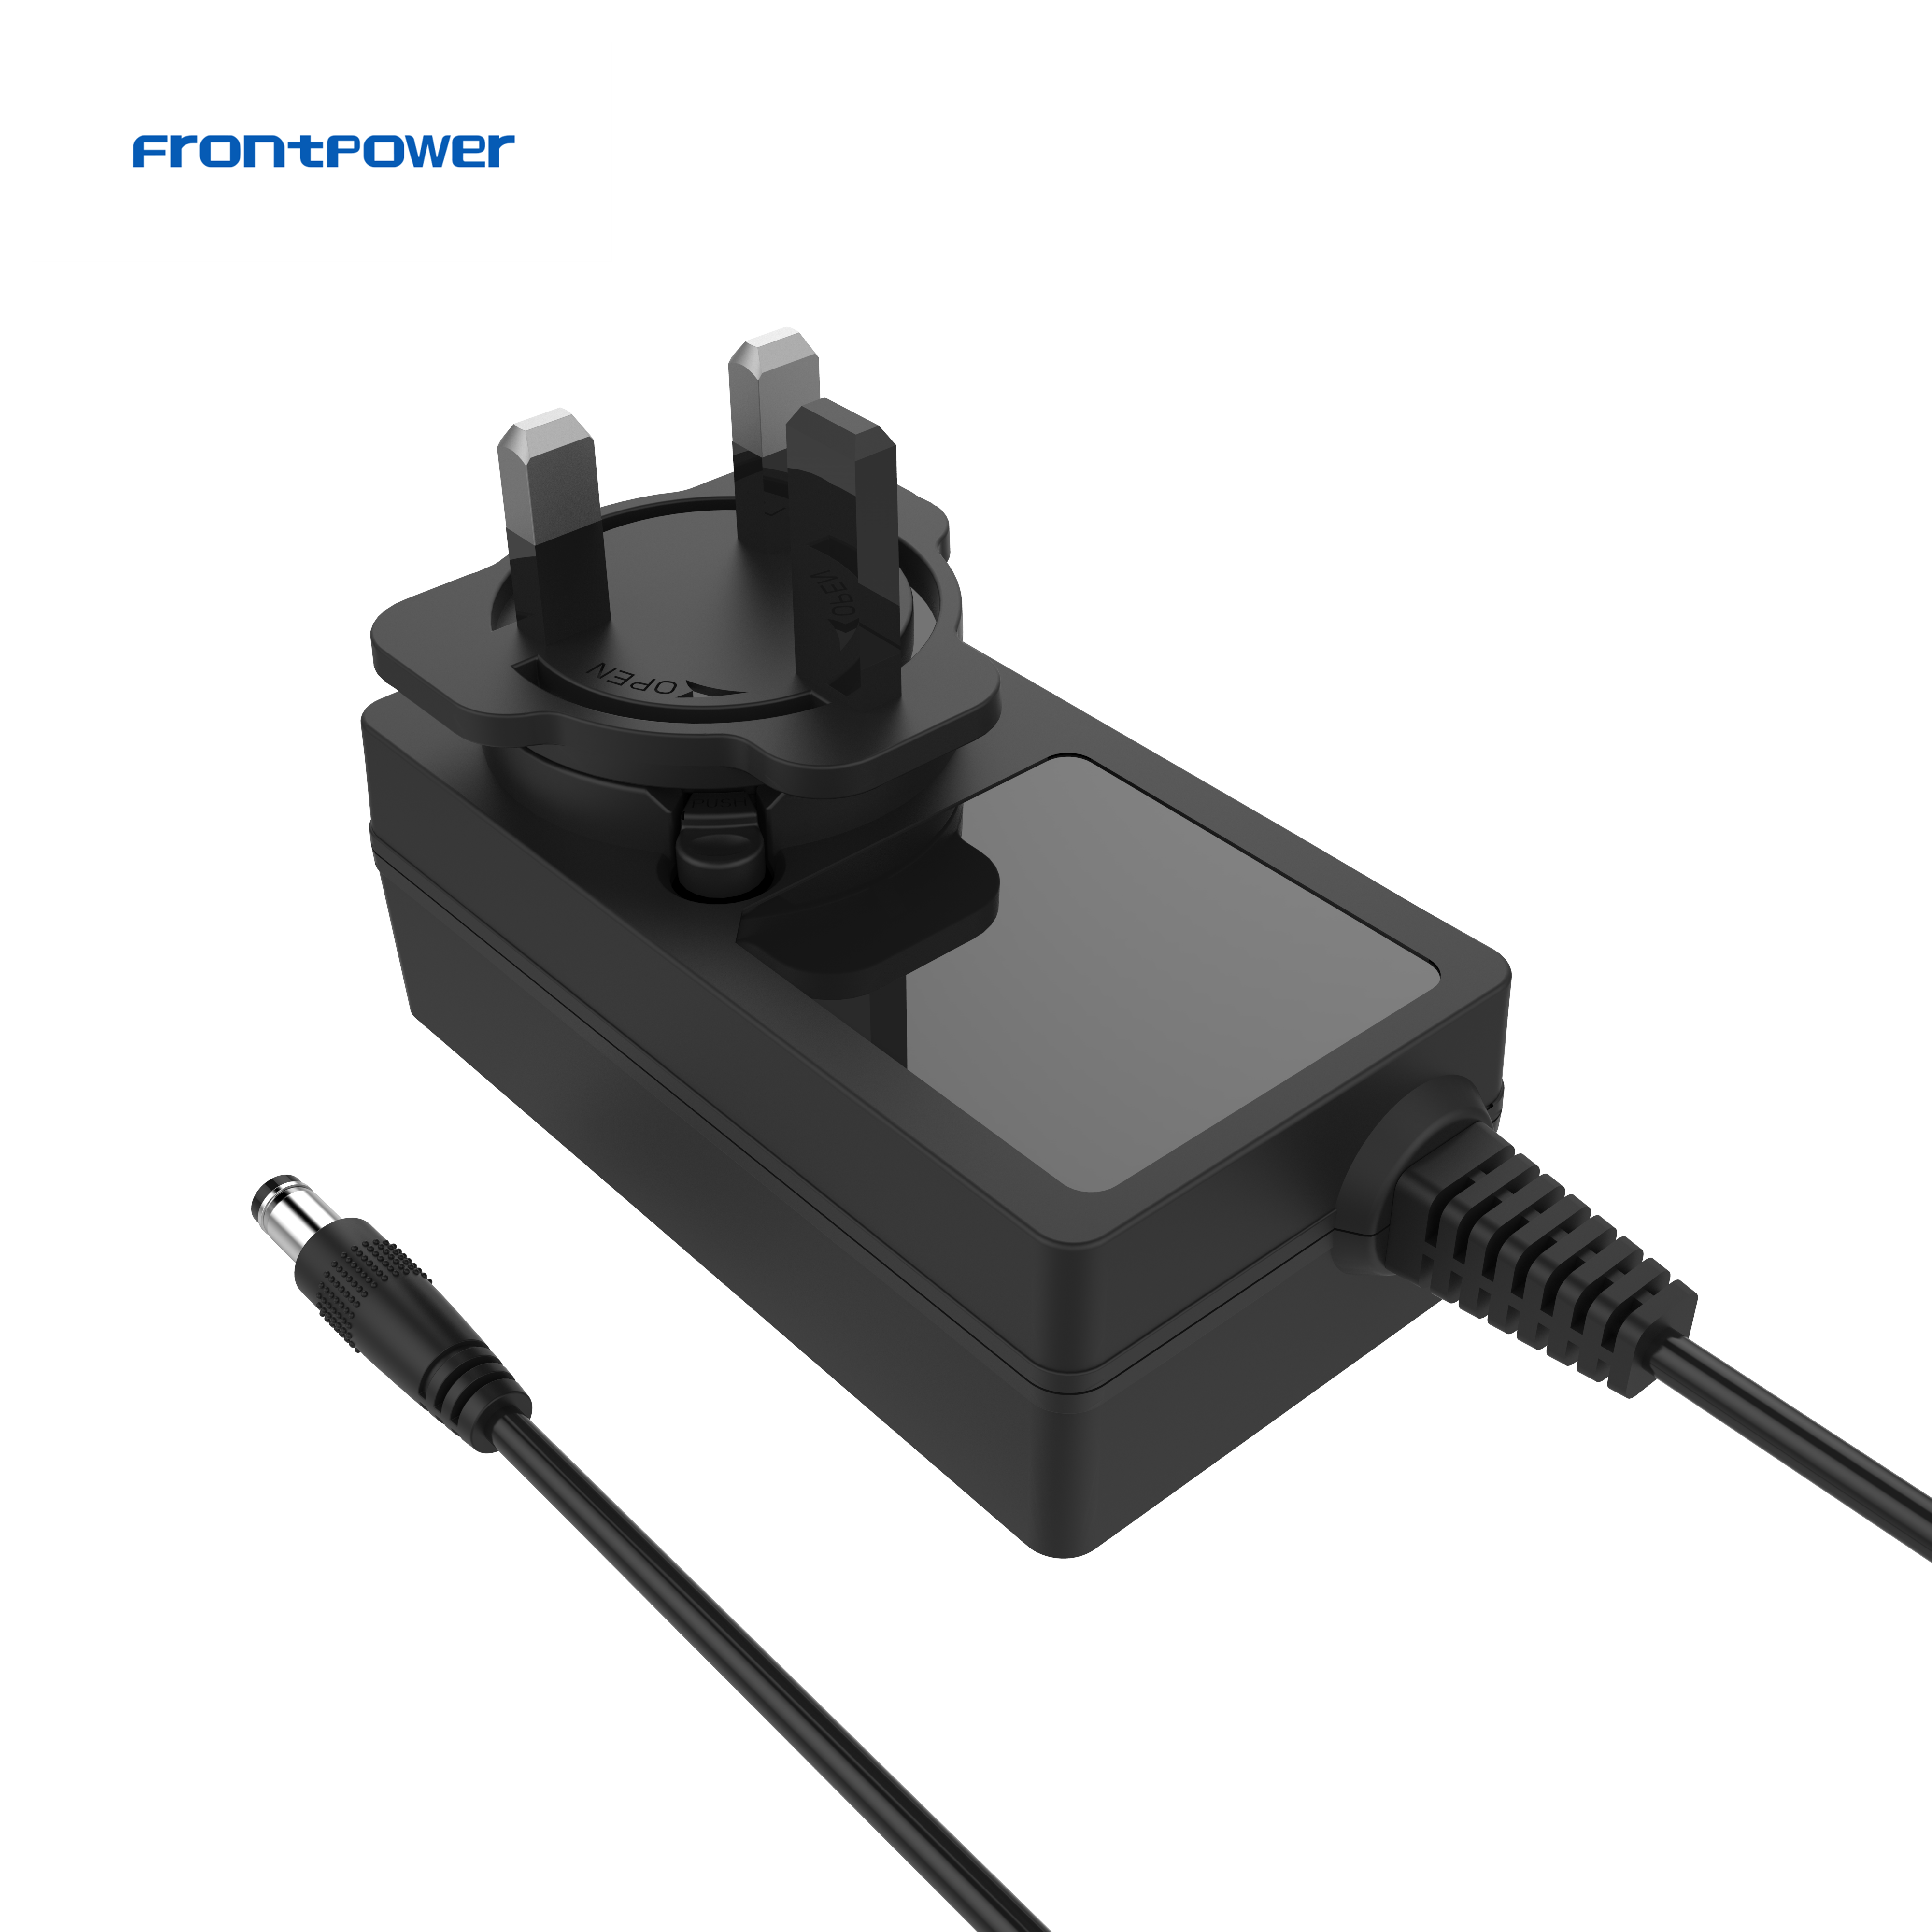 5V 9V 9.3V 12V 15V 24V US EU UK AU Interchangeable Plug SMPS Power Adapter Supply Switch ACDC Charger for POS Machine Printer